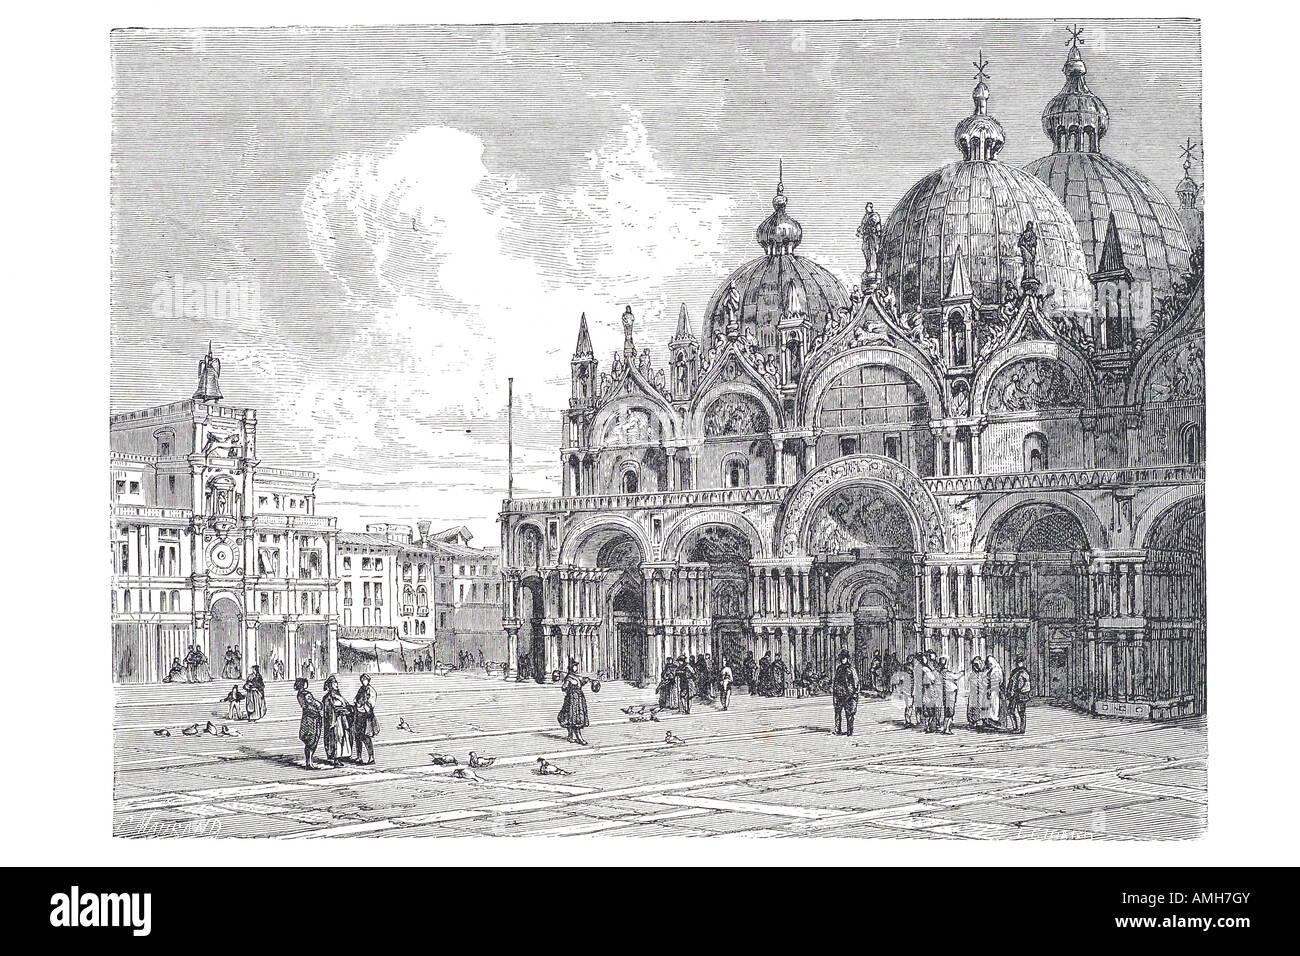 Basilica di San Marco Venezia Kathedrale Markuskirche byzantinische Architektur.  Quadratische Sestiere Kapelle venezianischen Herrscher Patri Stockfoto